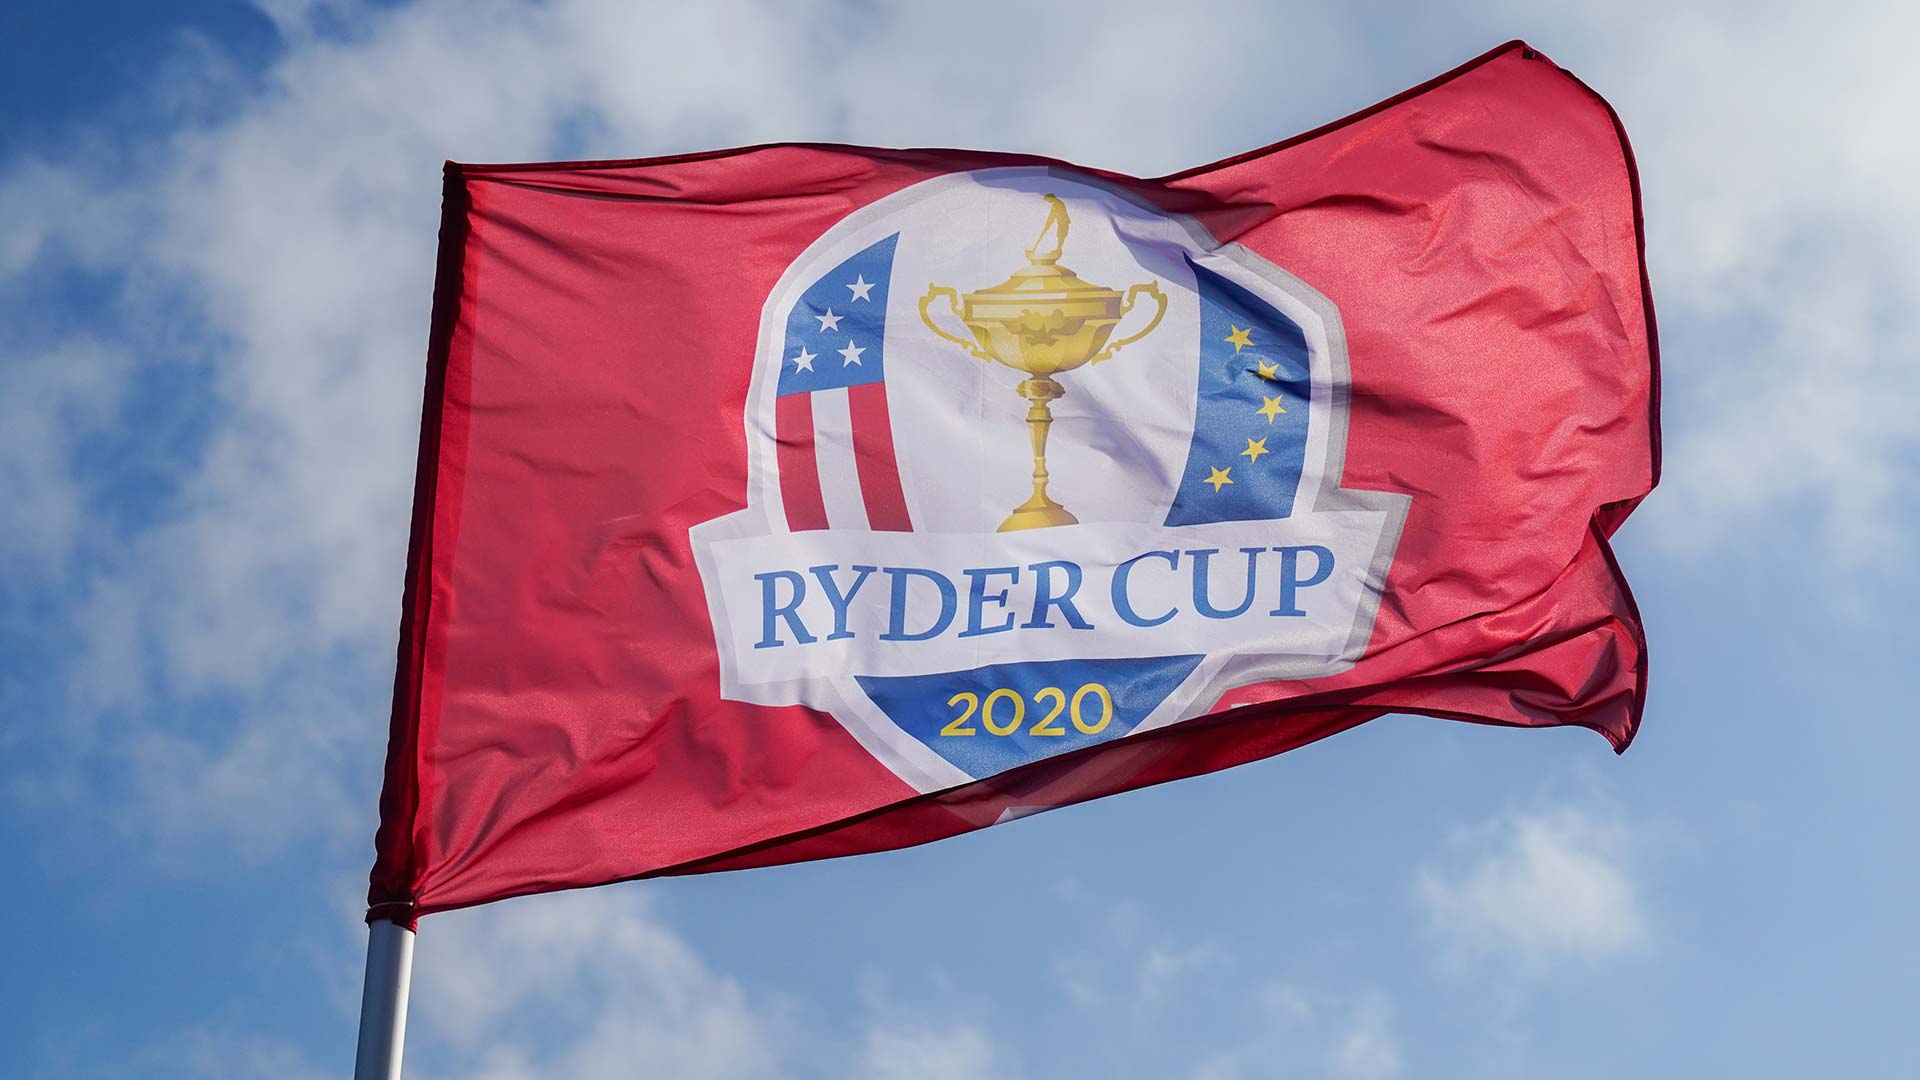 Ryder cup 2021 schedule